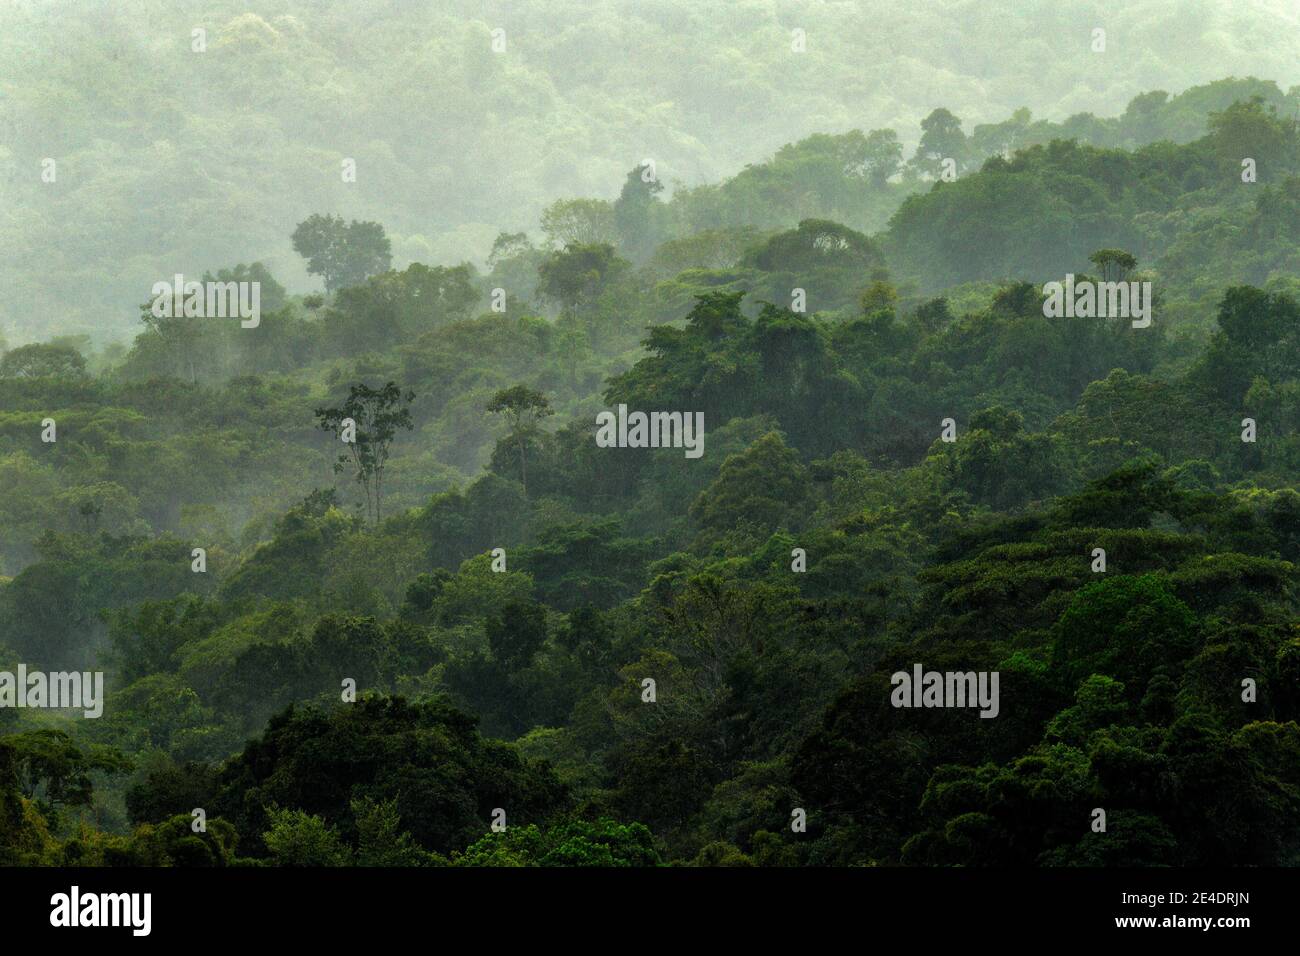 Lush Green Tropical Rainforest Background Mountain Stock Photo 571855033